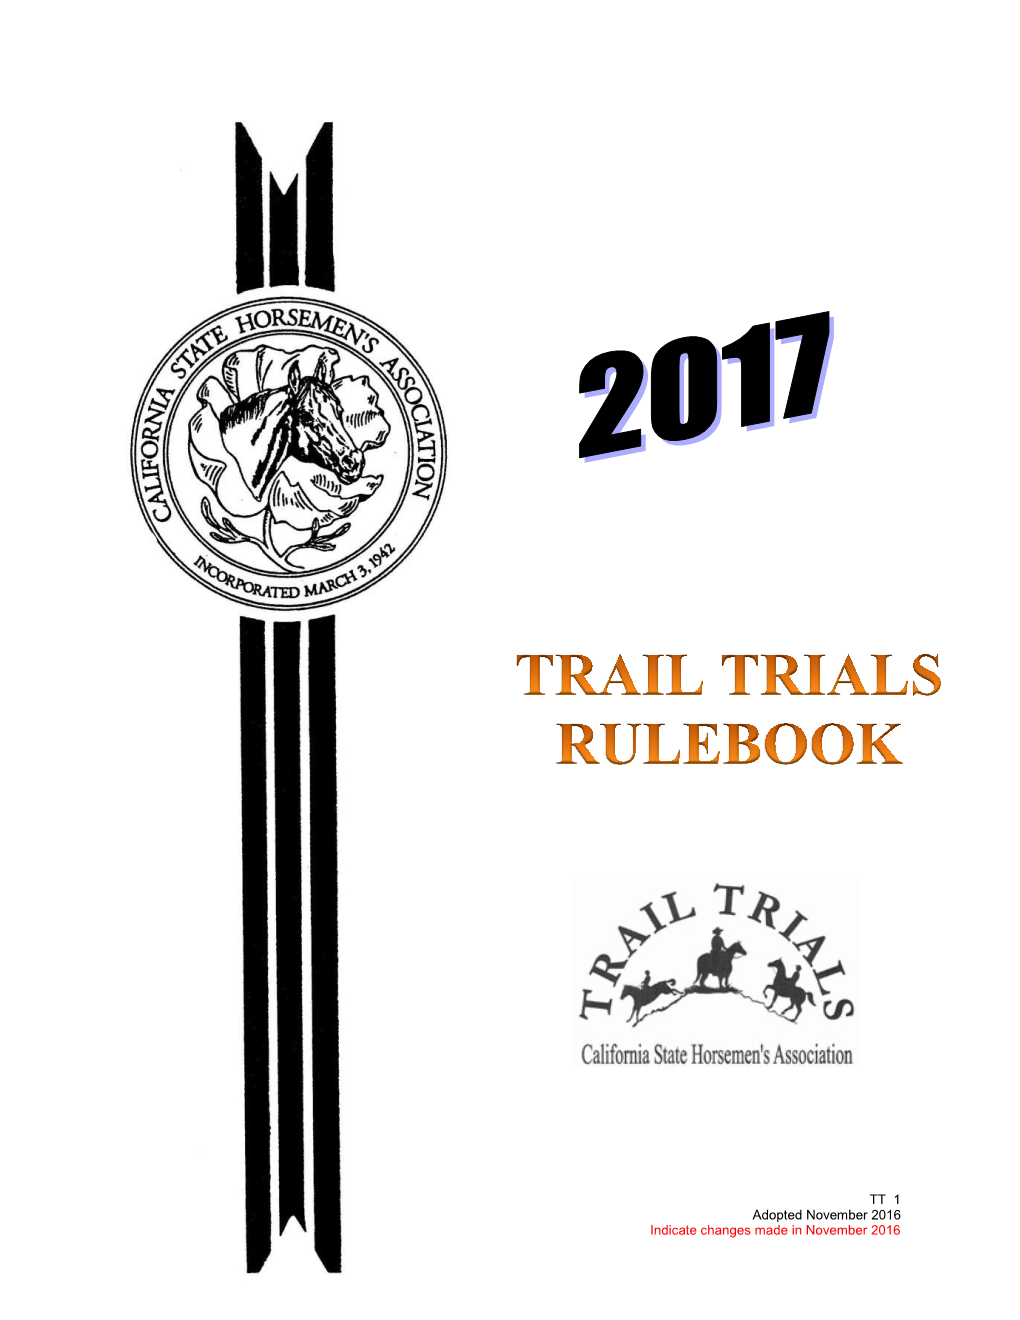 2005 Trail Trials Rules